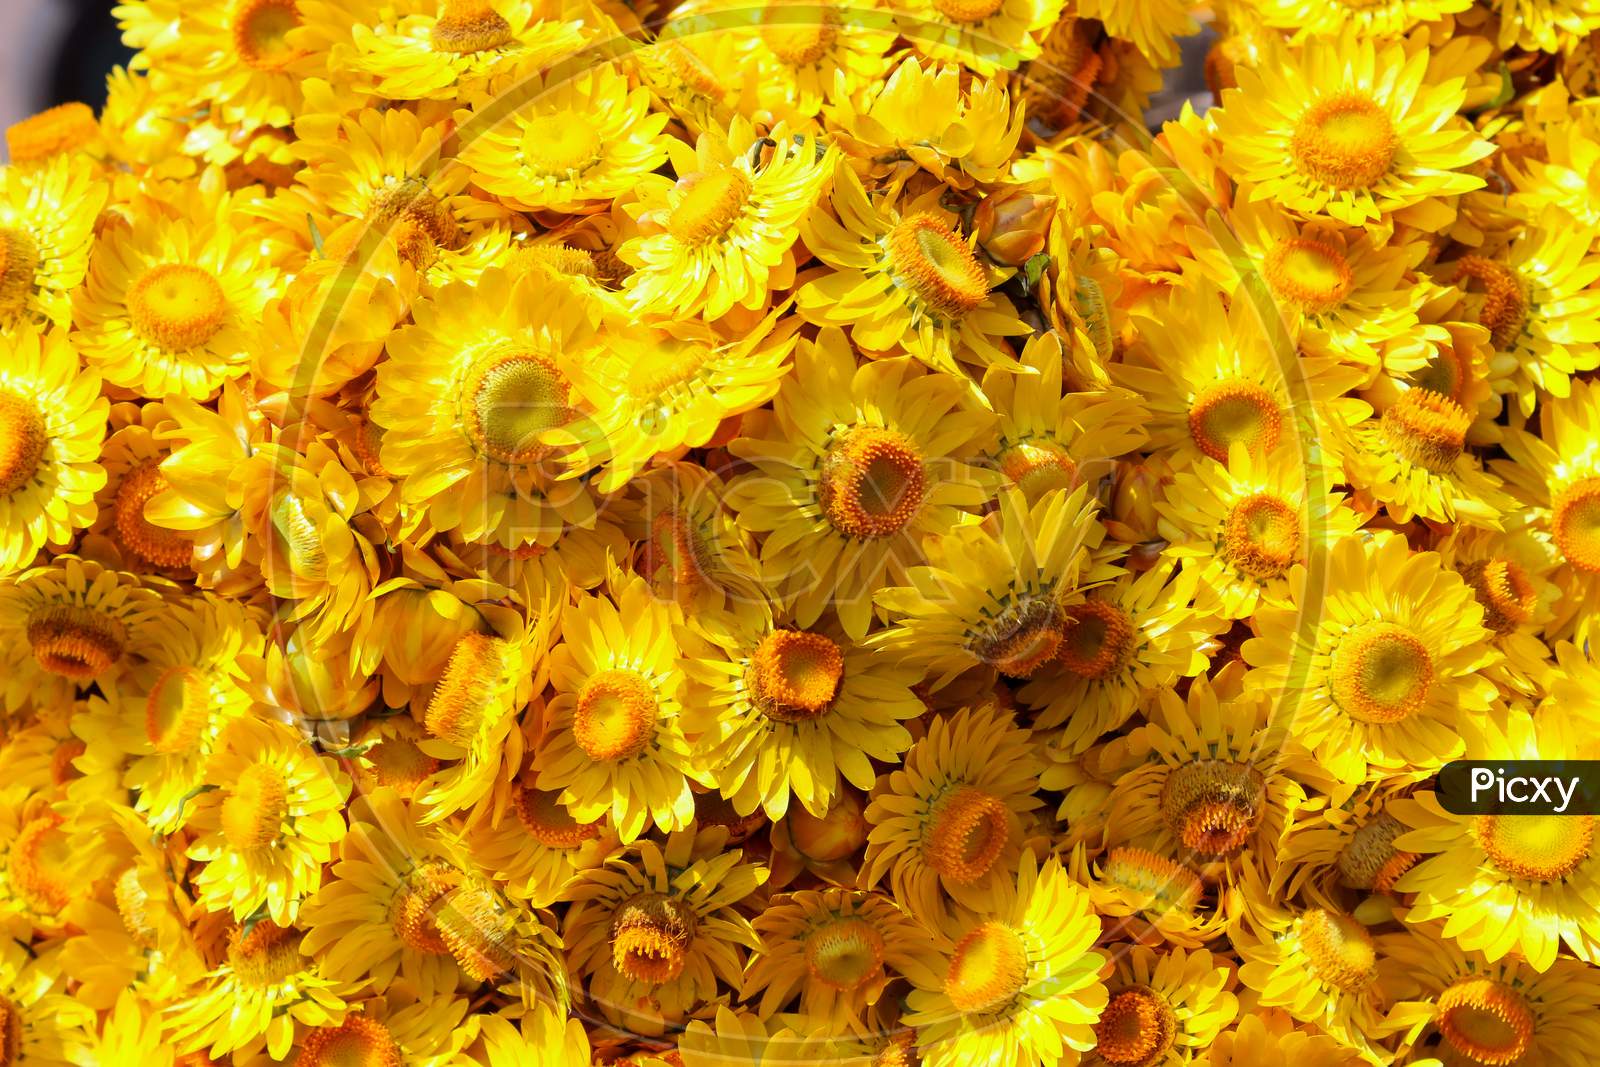 Yellow Chrysanthemum flowers in Ooty/India.